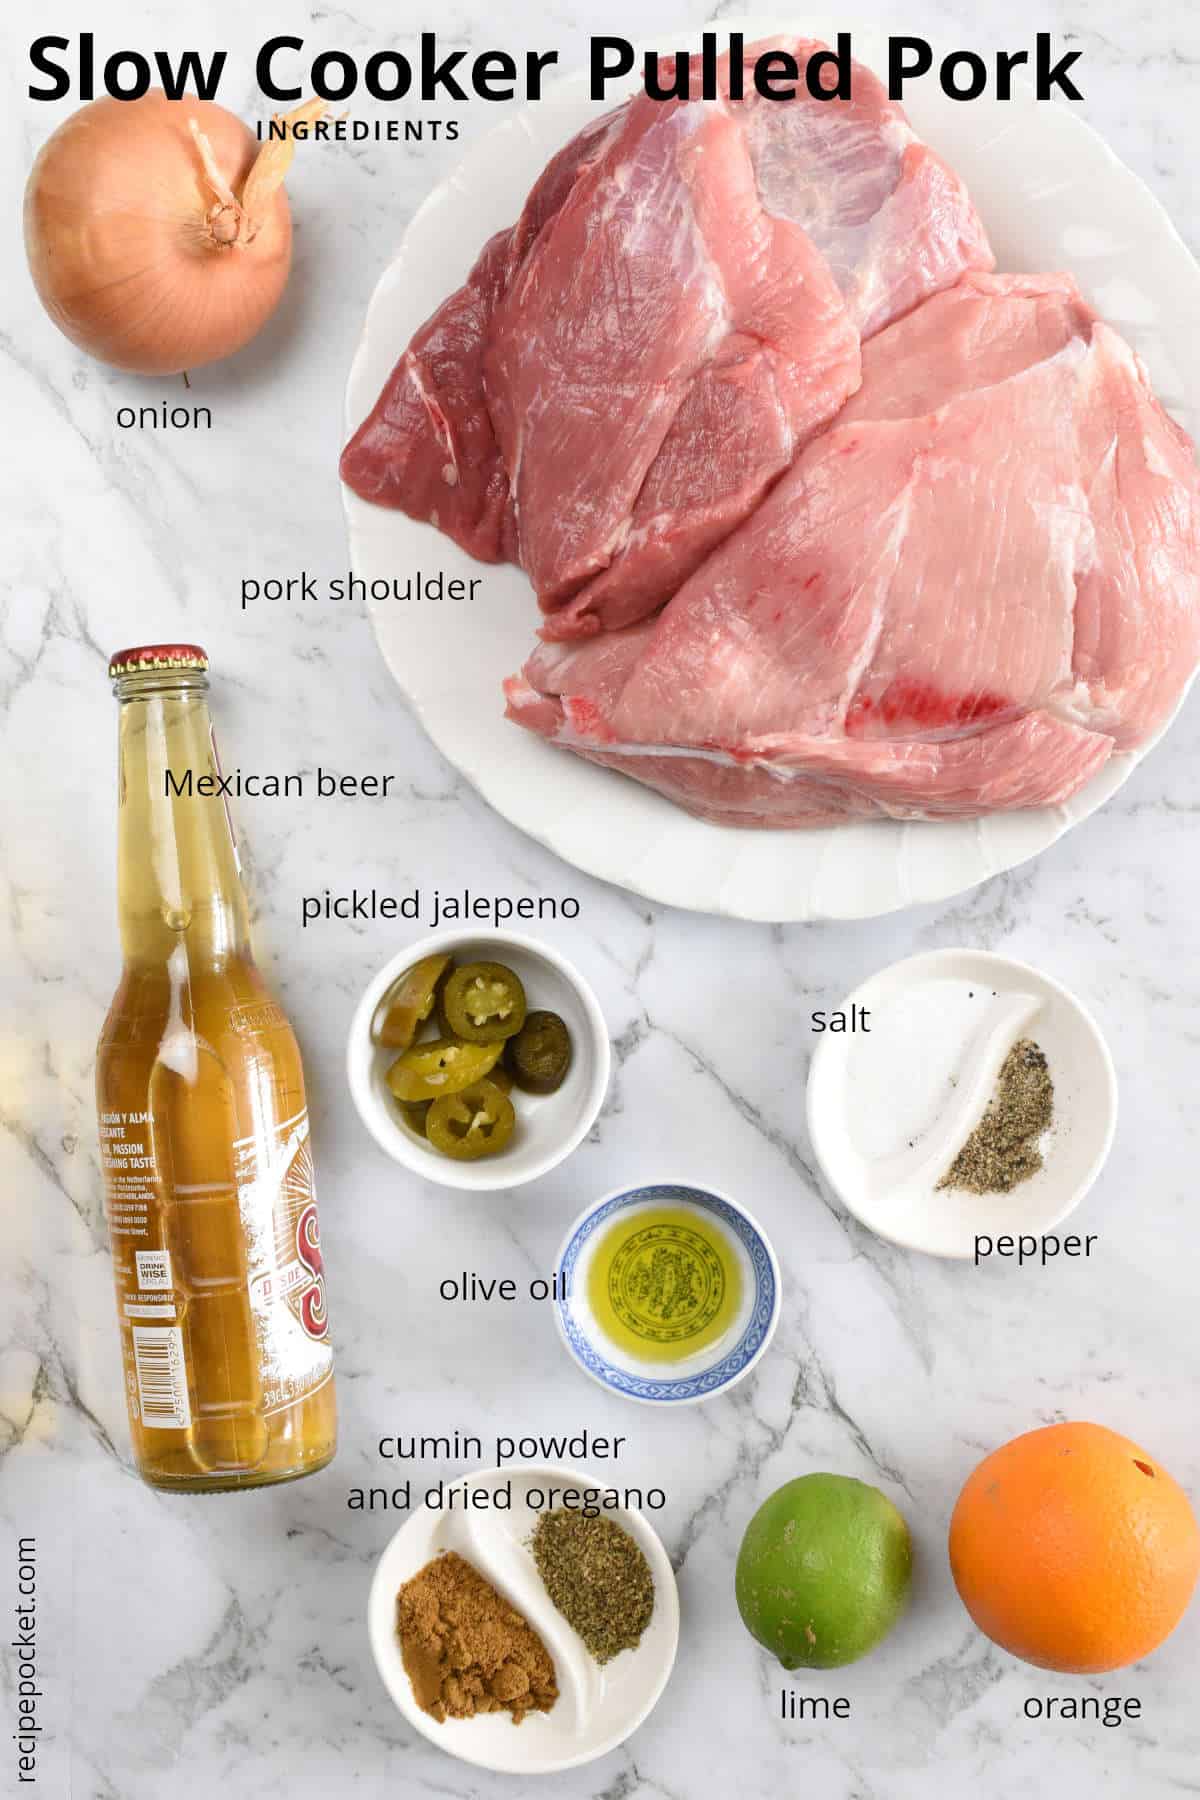 Ingredients image for pulled pork.